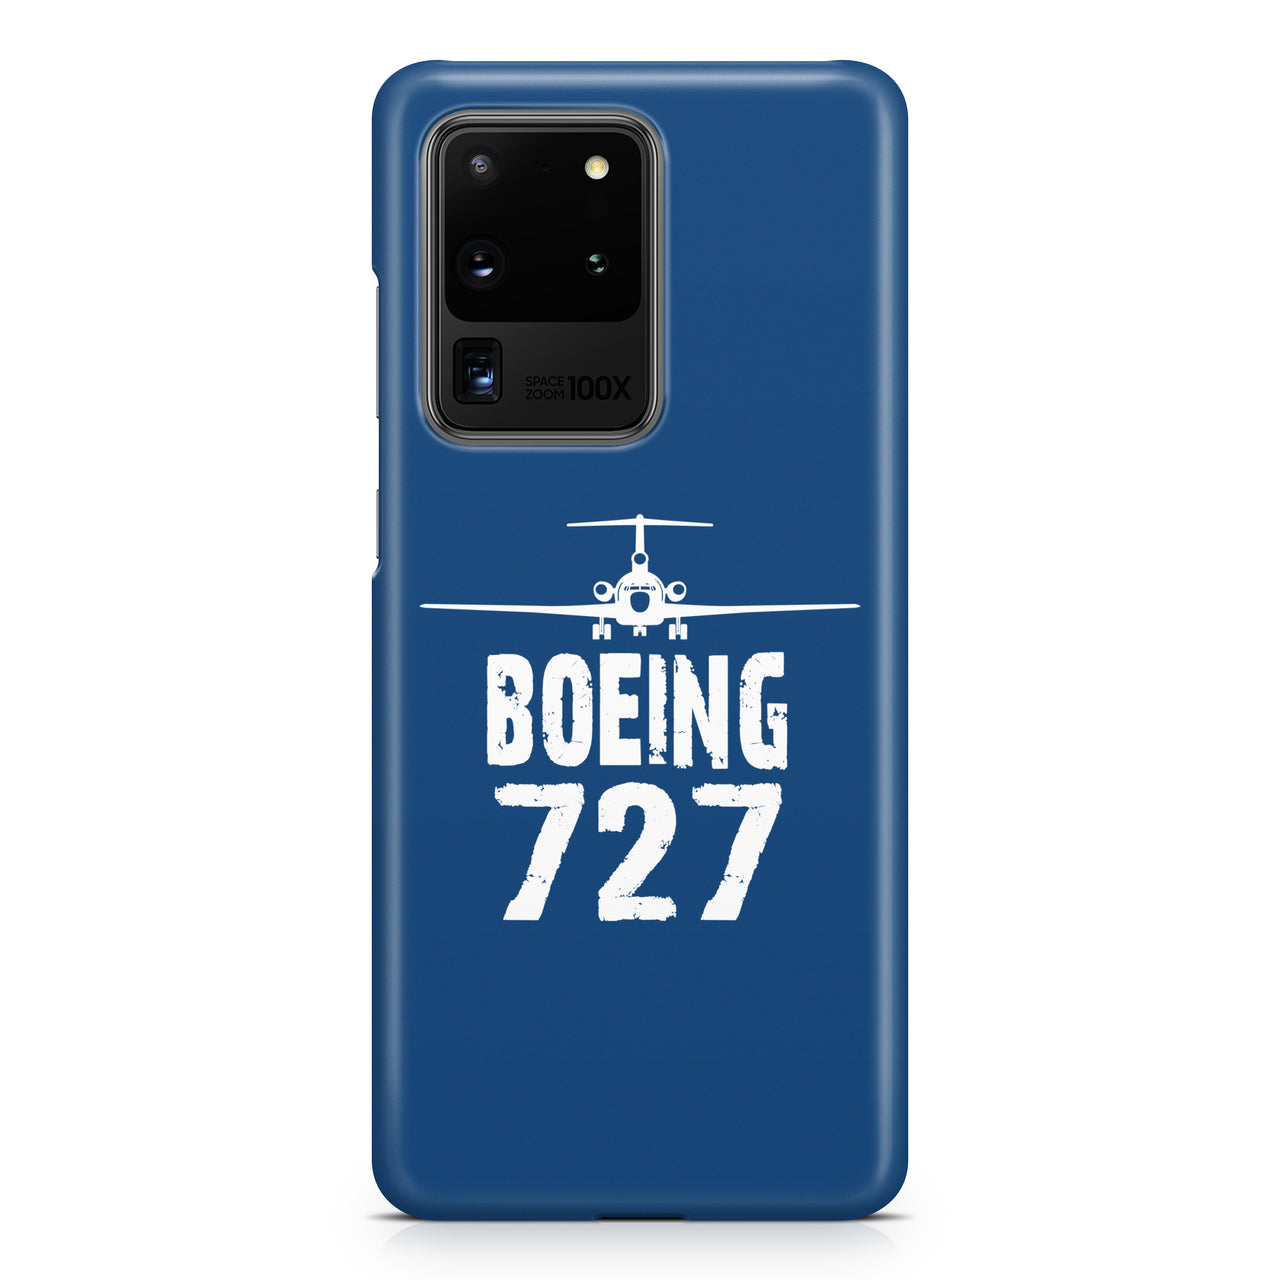 Boeing 727 & Plane Samsung A Cases